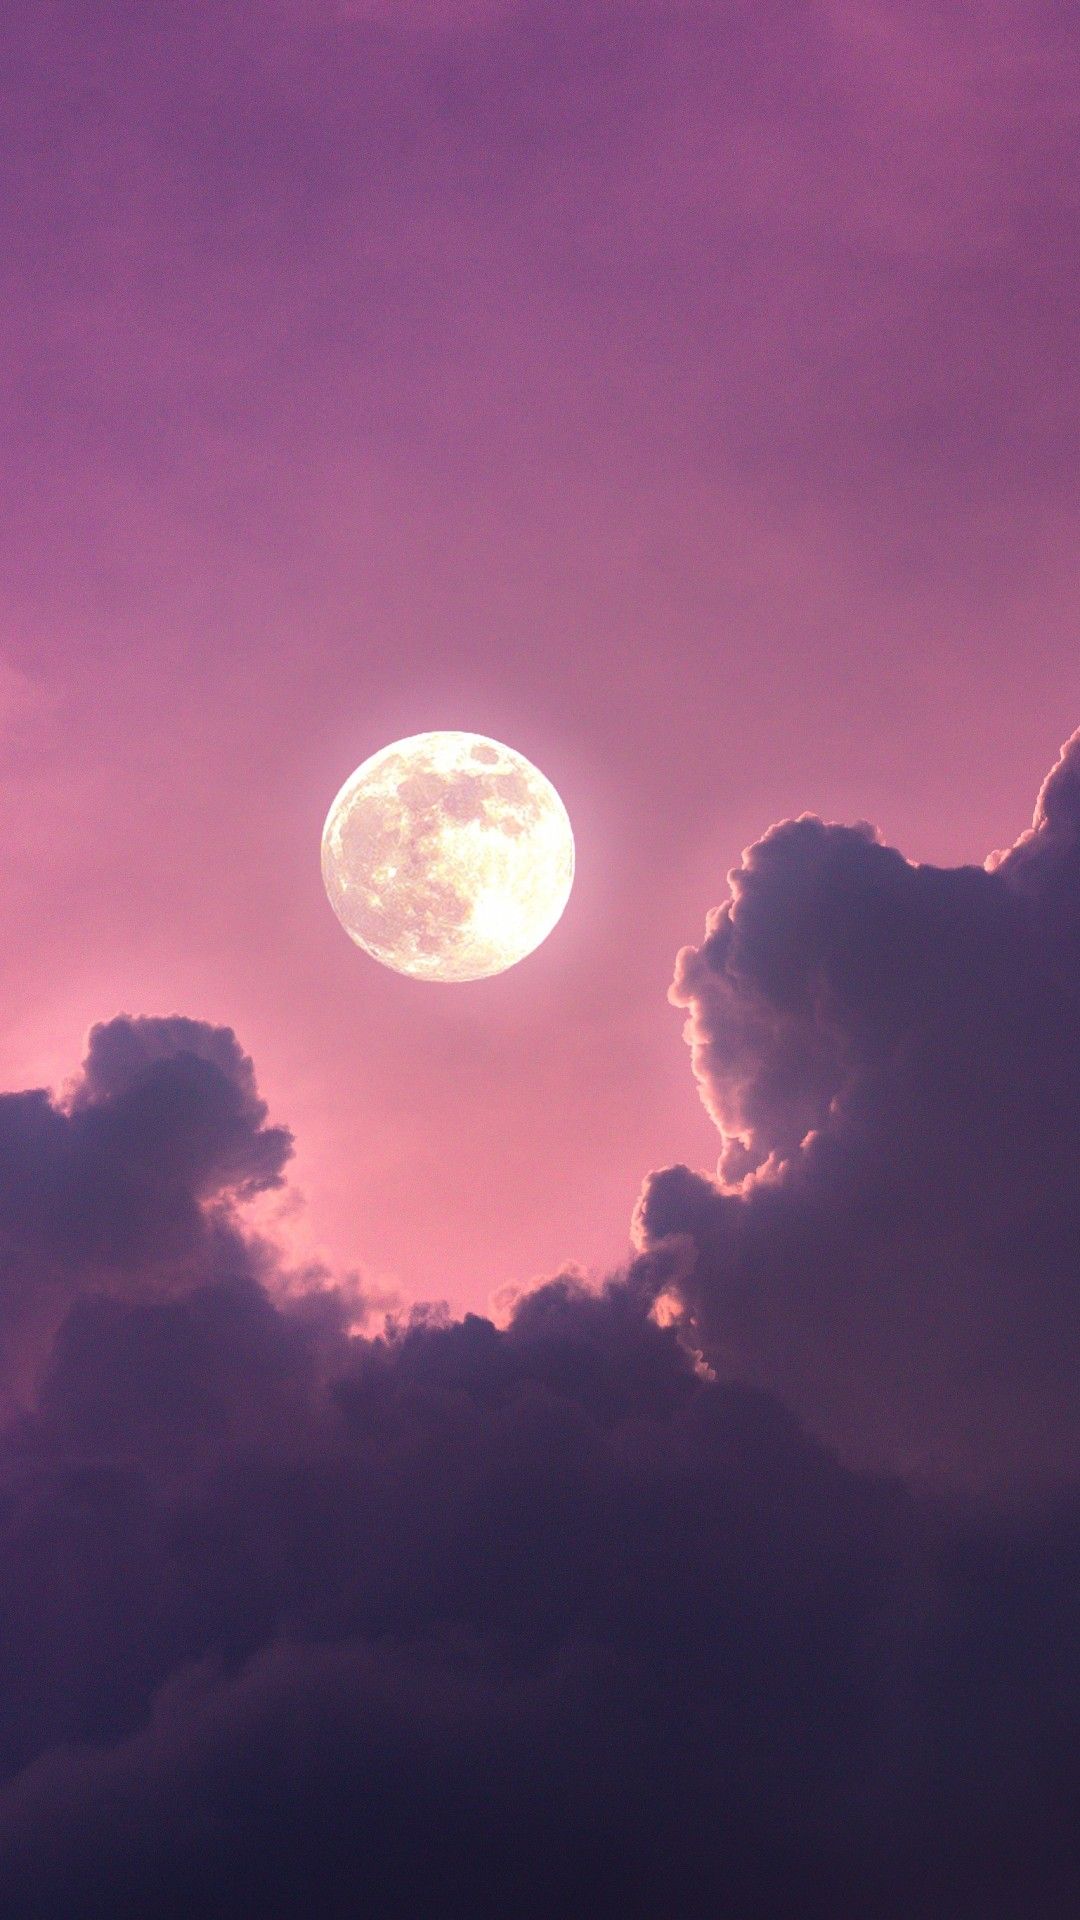 Full moon 4K Wallpaper, Clouds, Pink sky, Nature